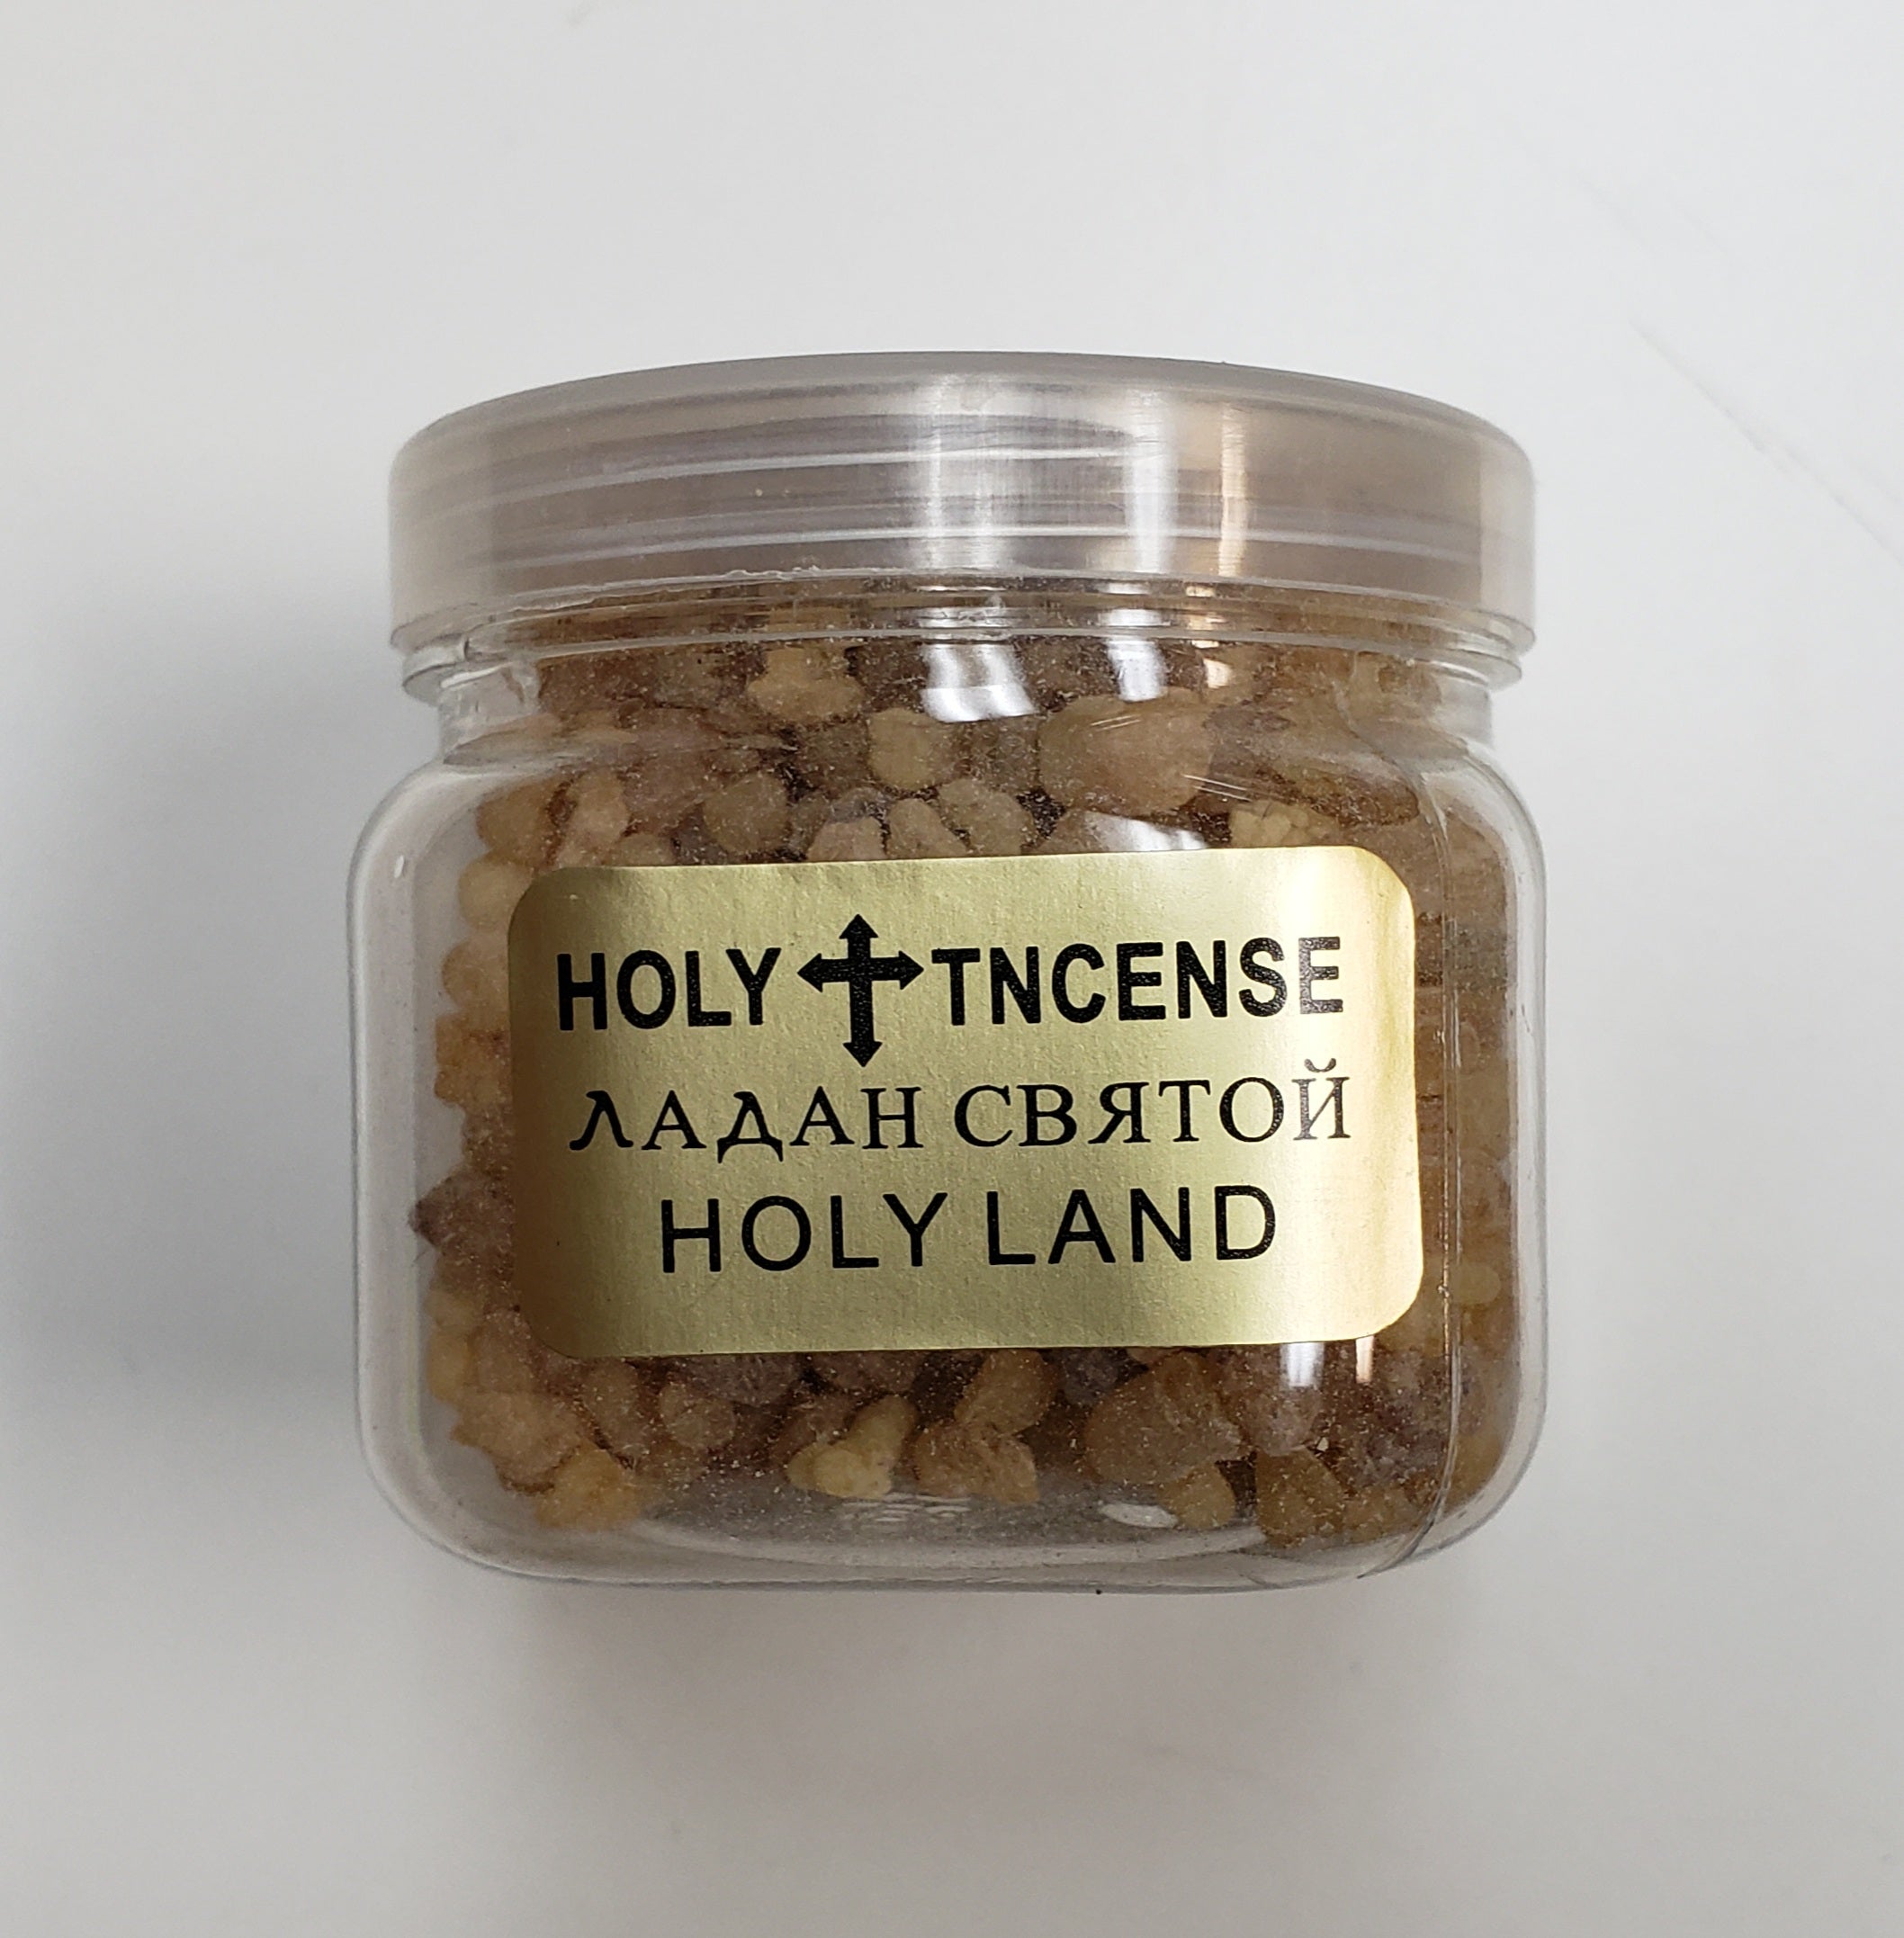 Holy land Incense